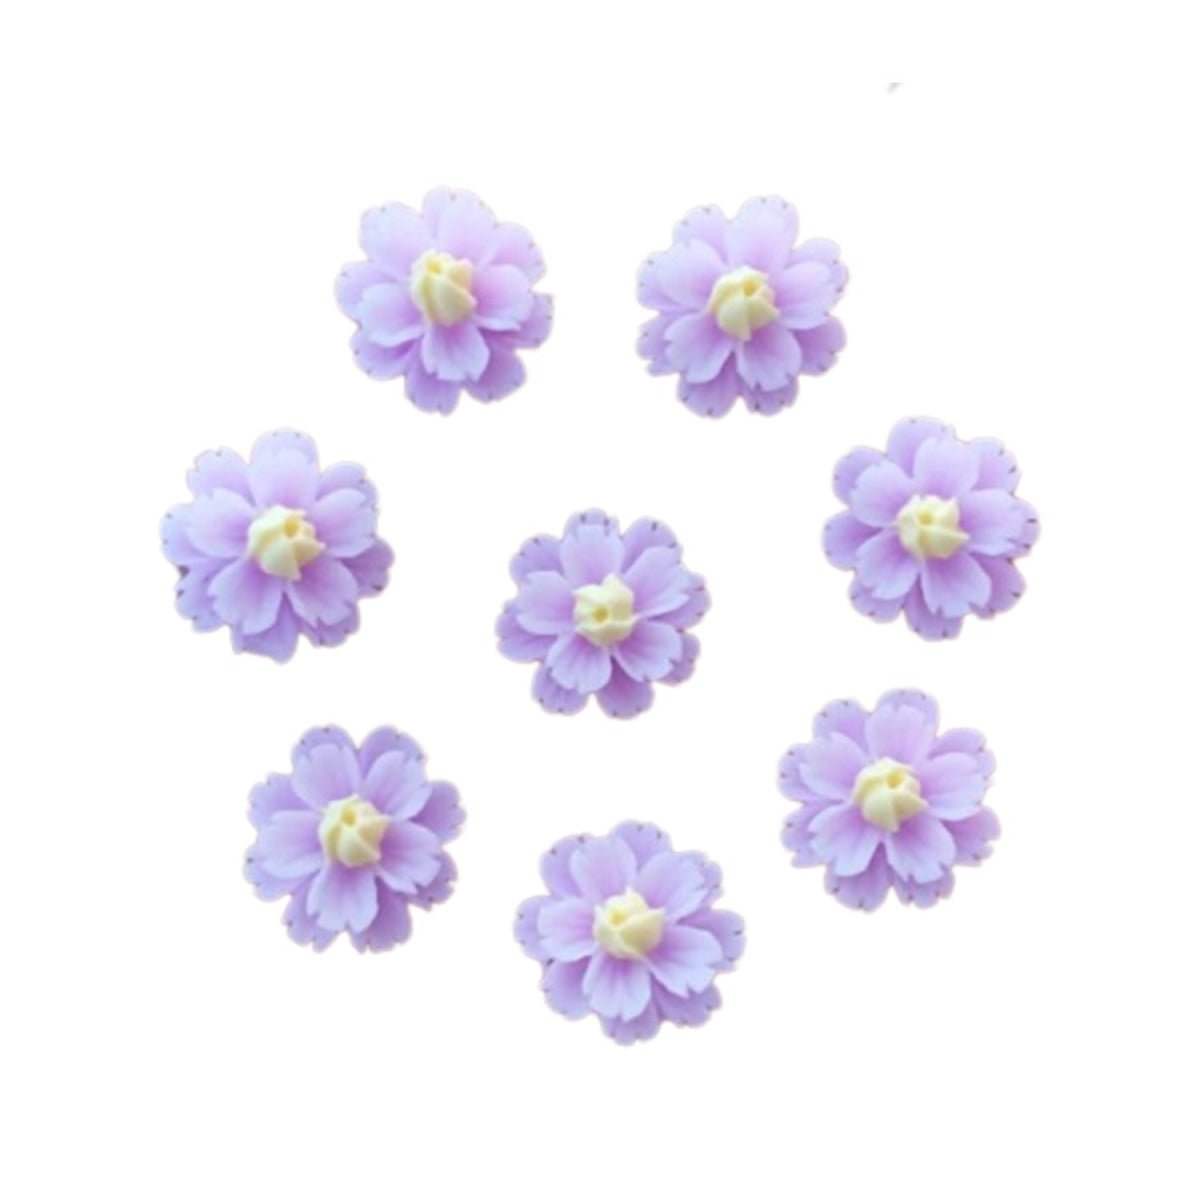 40pcs 3D Flower Flatback Embellishment 13mm Resin Shape Decorations DIY Crafts - Light Purple - - Asia Sell